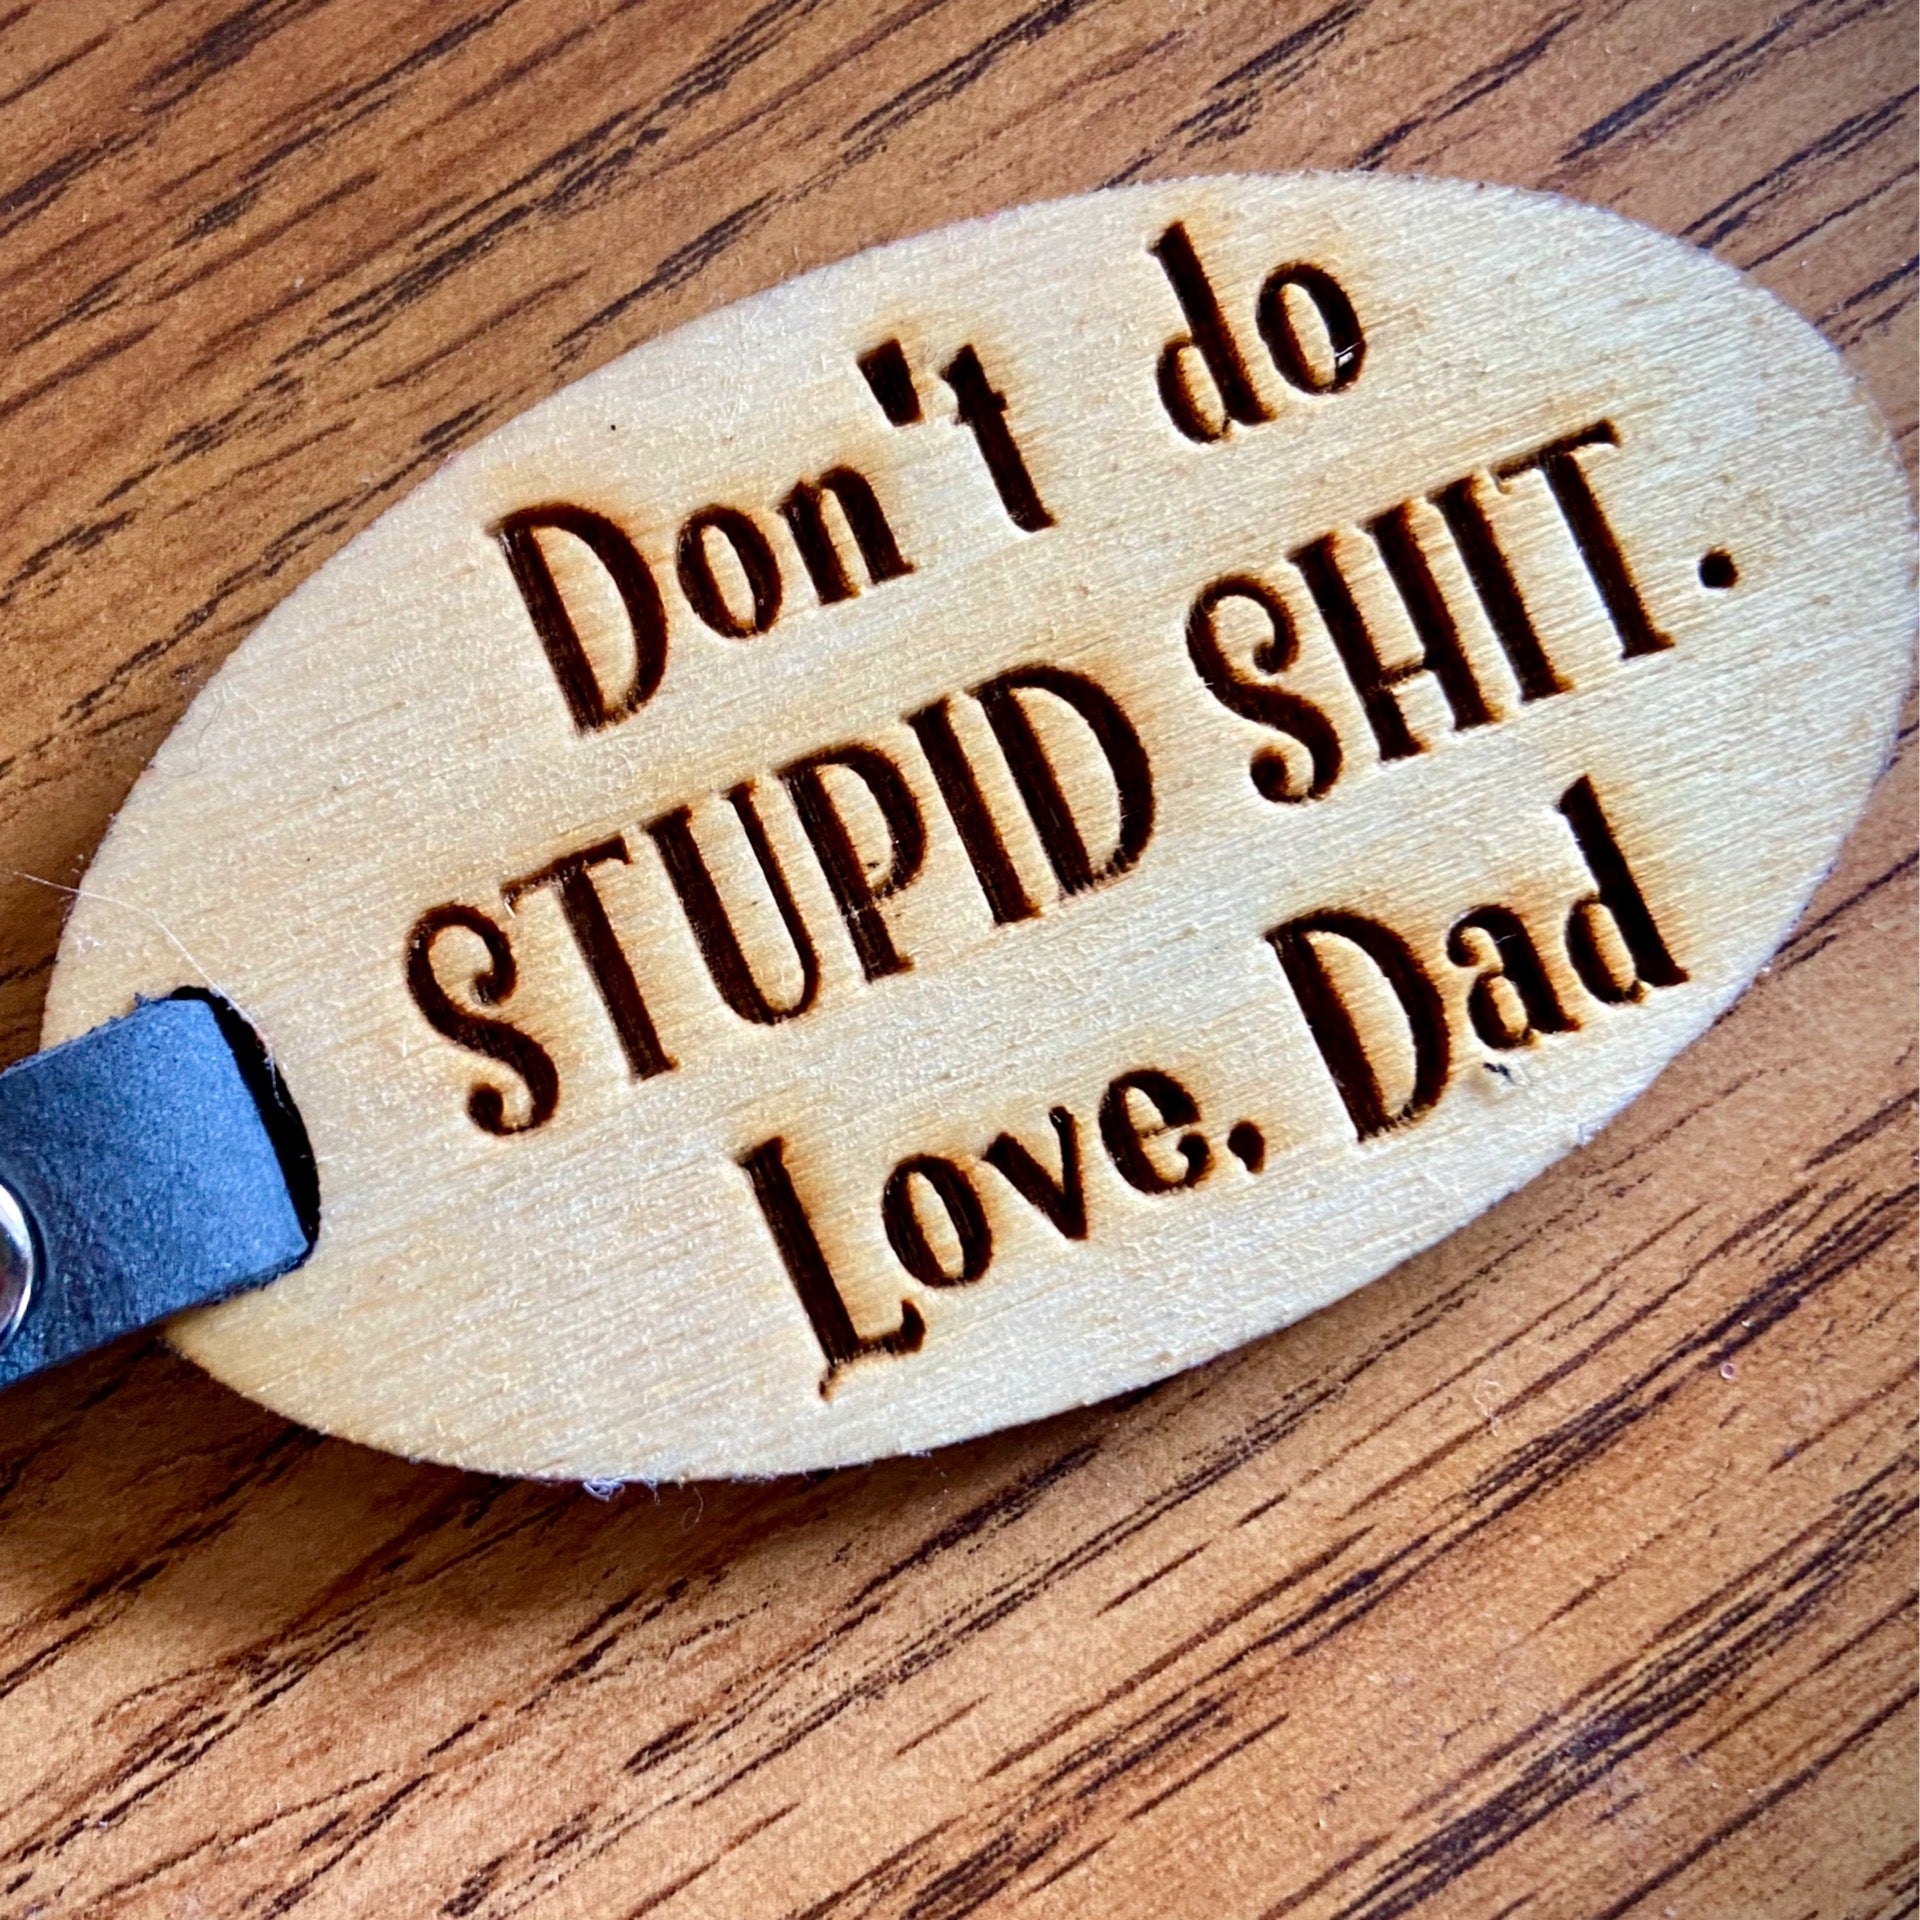 Don't Do Stupid Shit Keychain